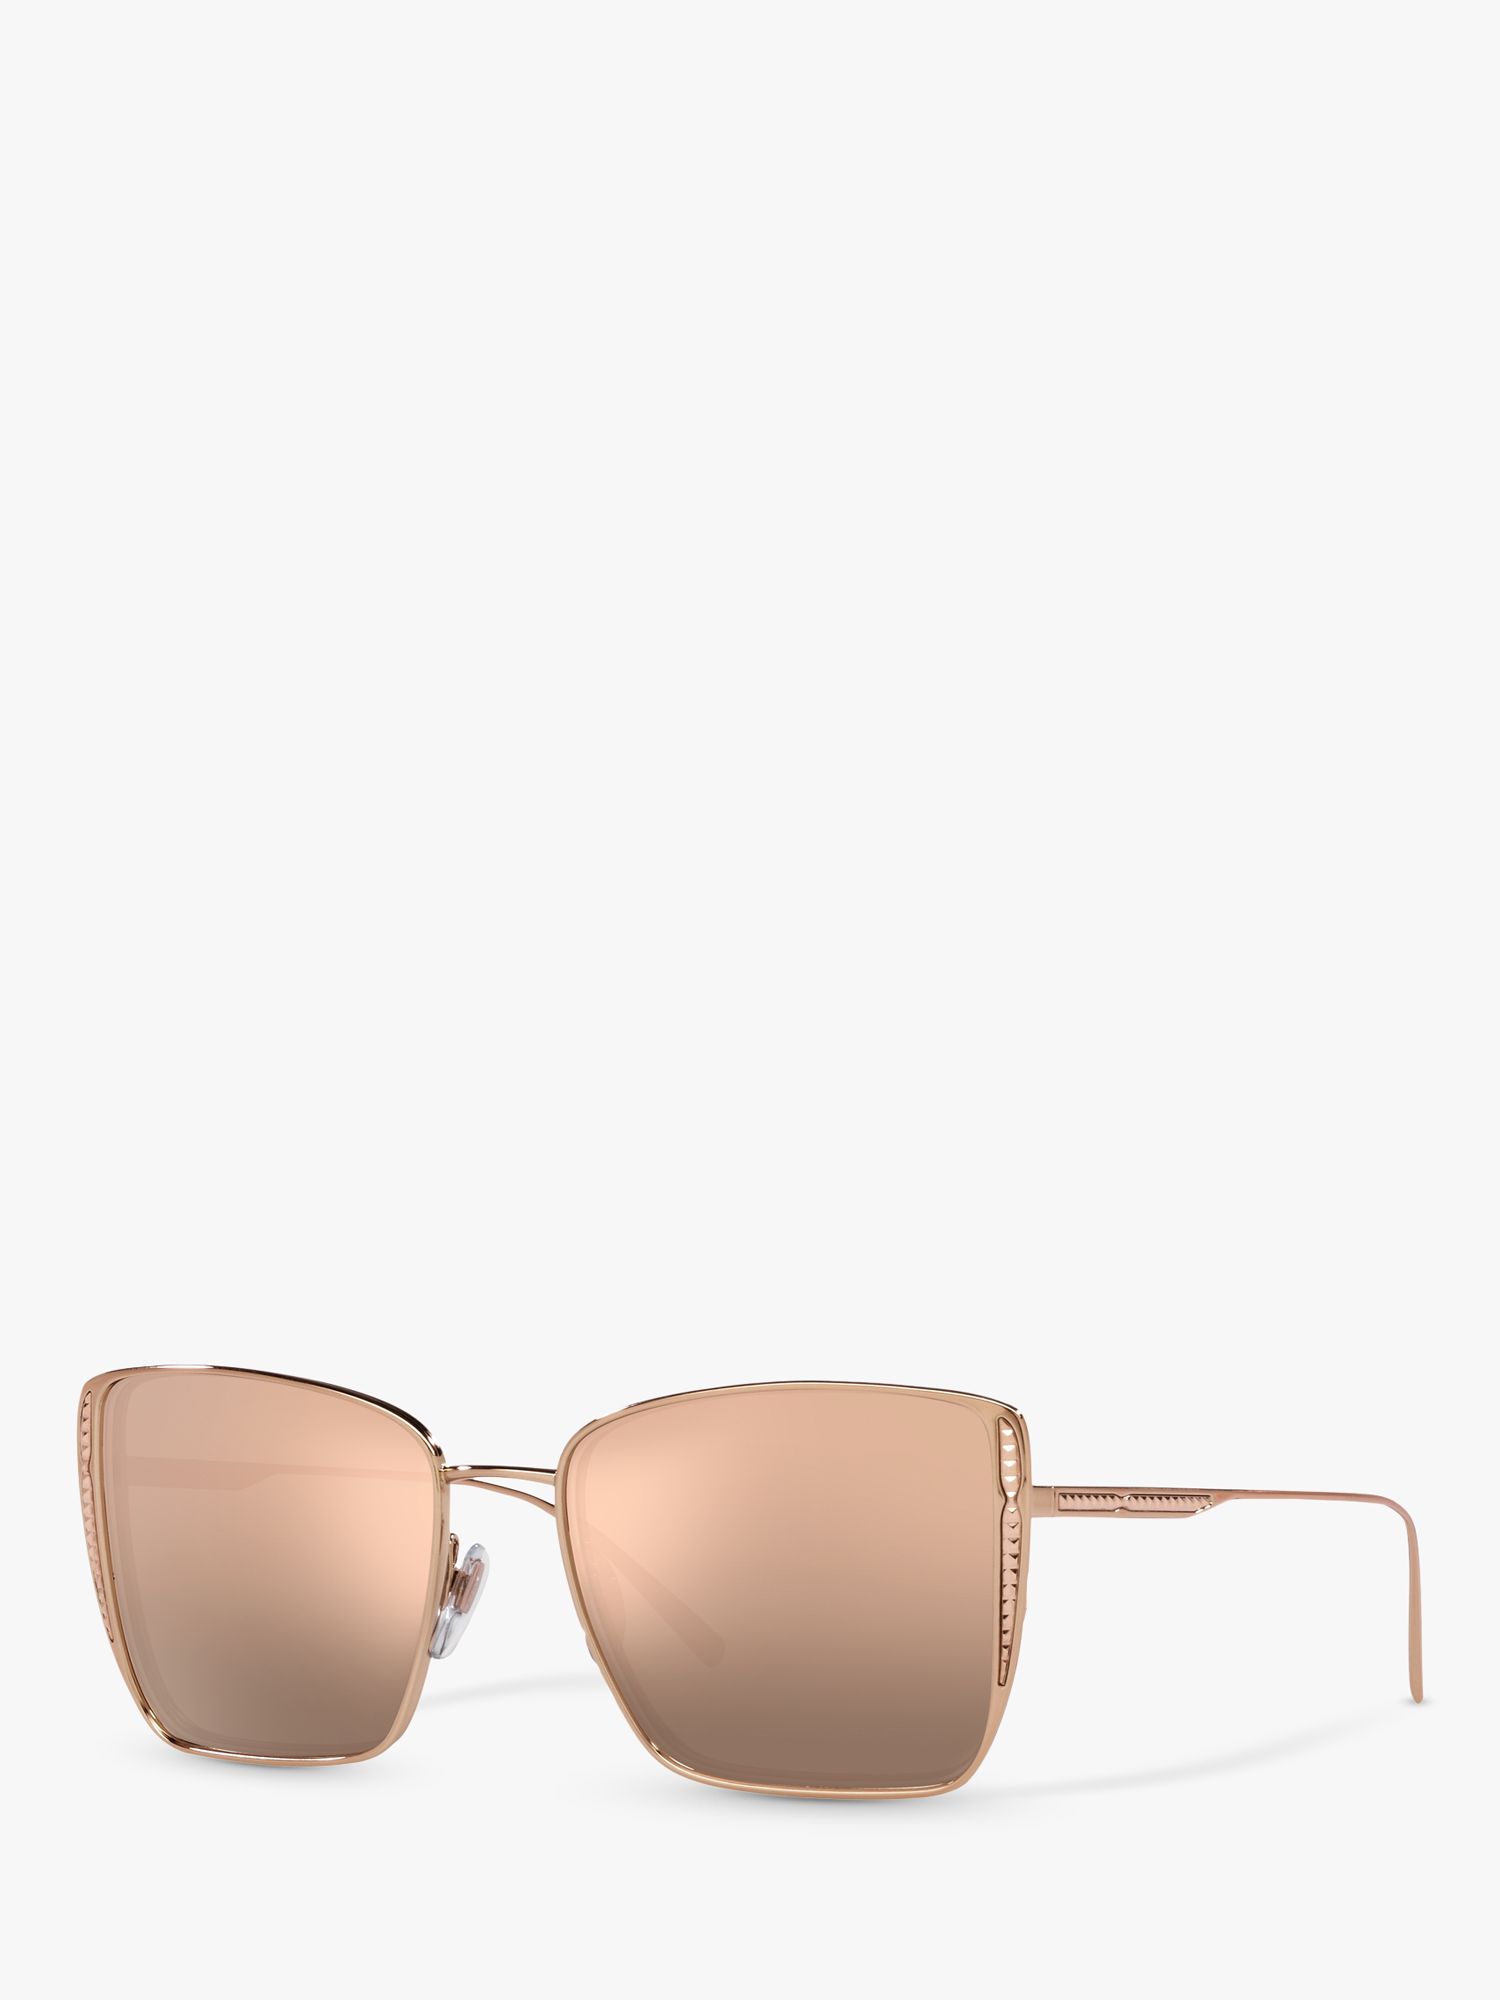 BVLGARI BV6176 Women's Square Sunglasses, Pink Gold/Gold Mirror at John ...